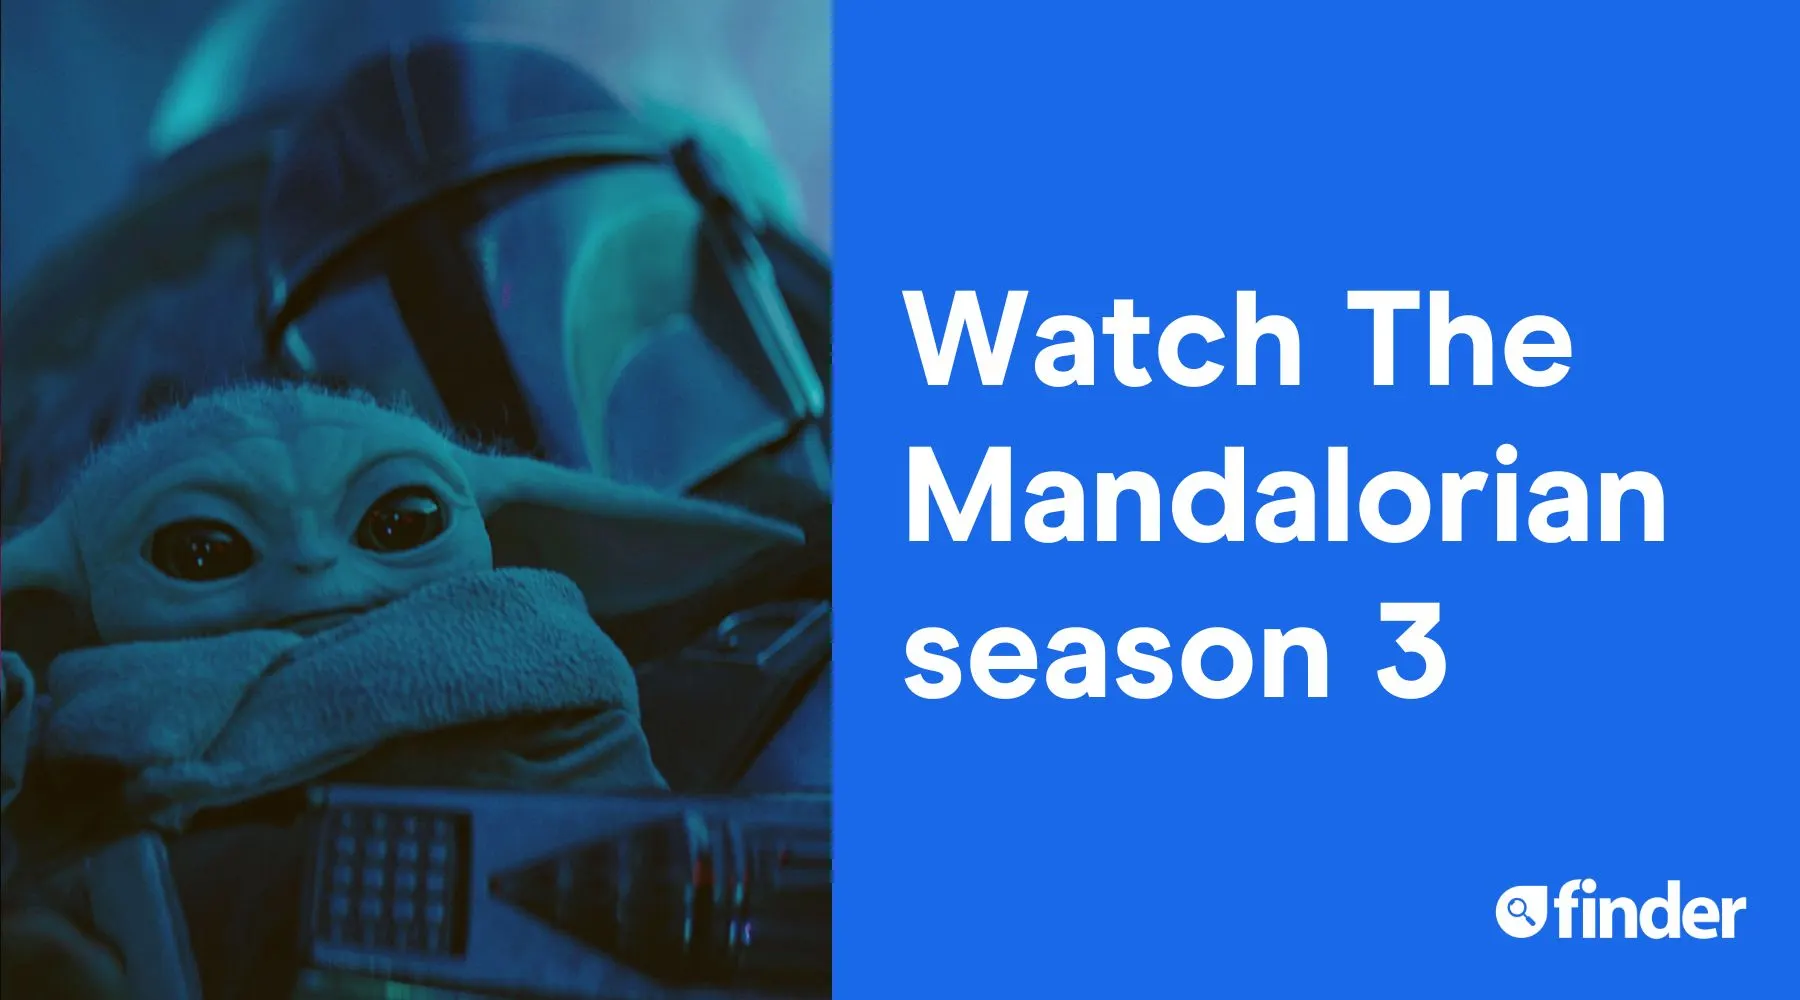 The Mandalorian season 3 release schedule: When is episode 8 on Disney+?